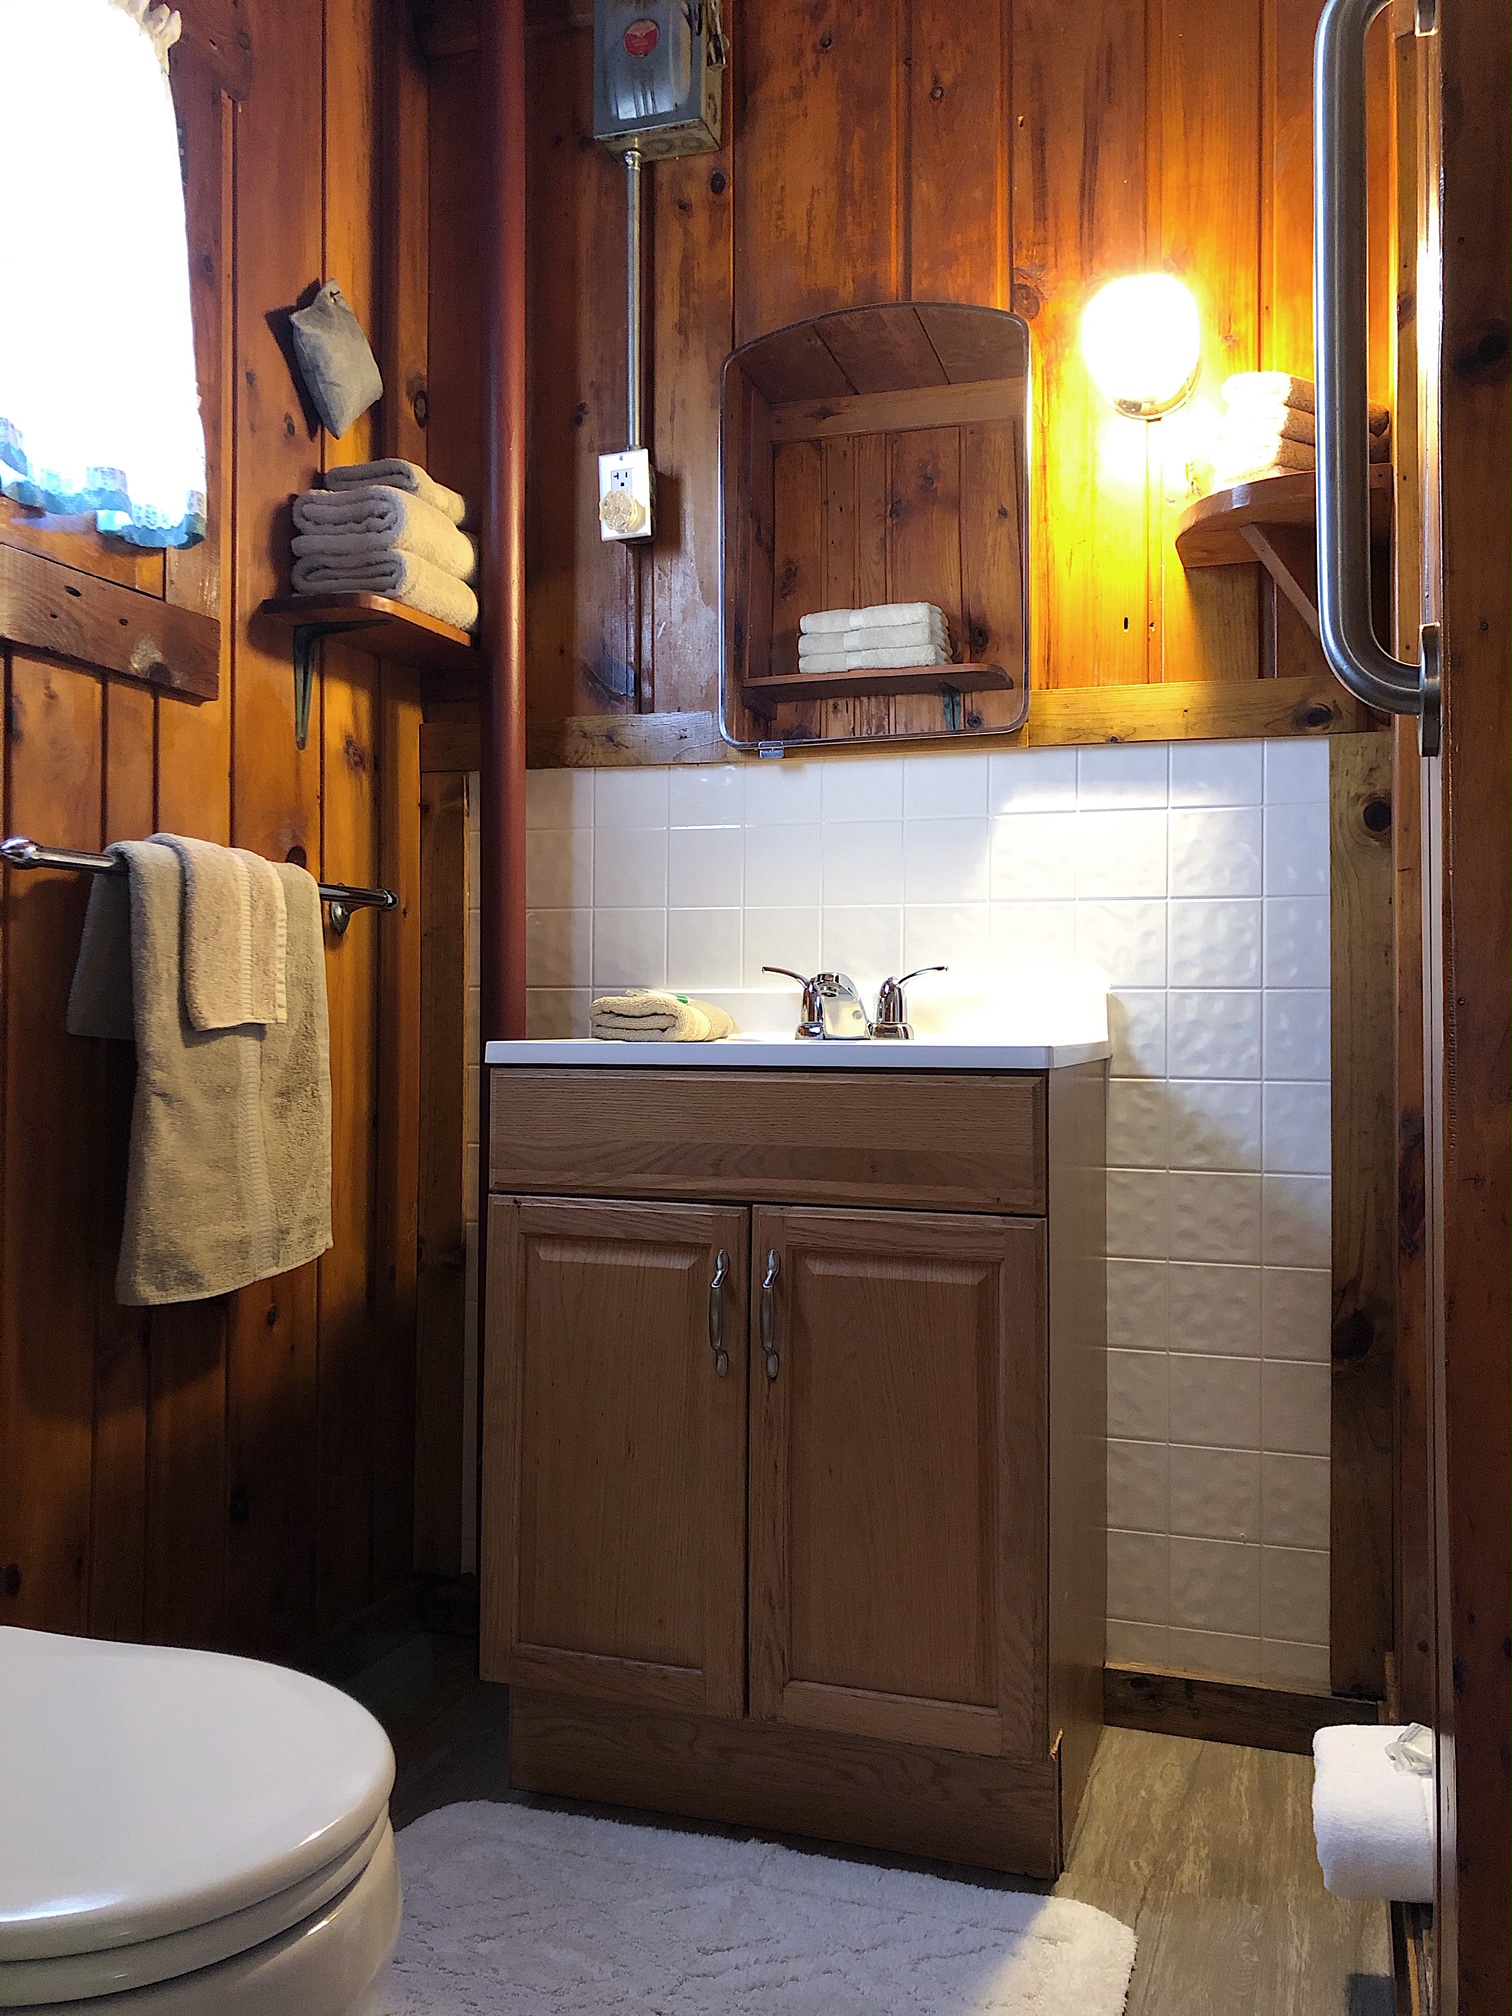 Twin Cedars Resort cabin 3 bathroom